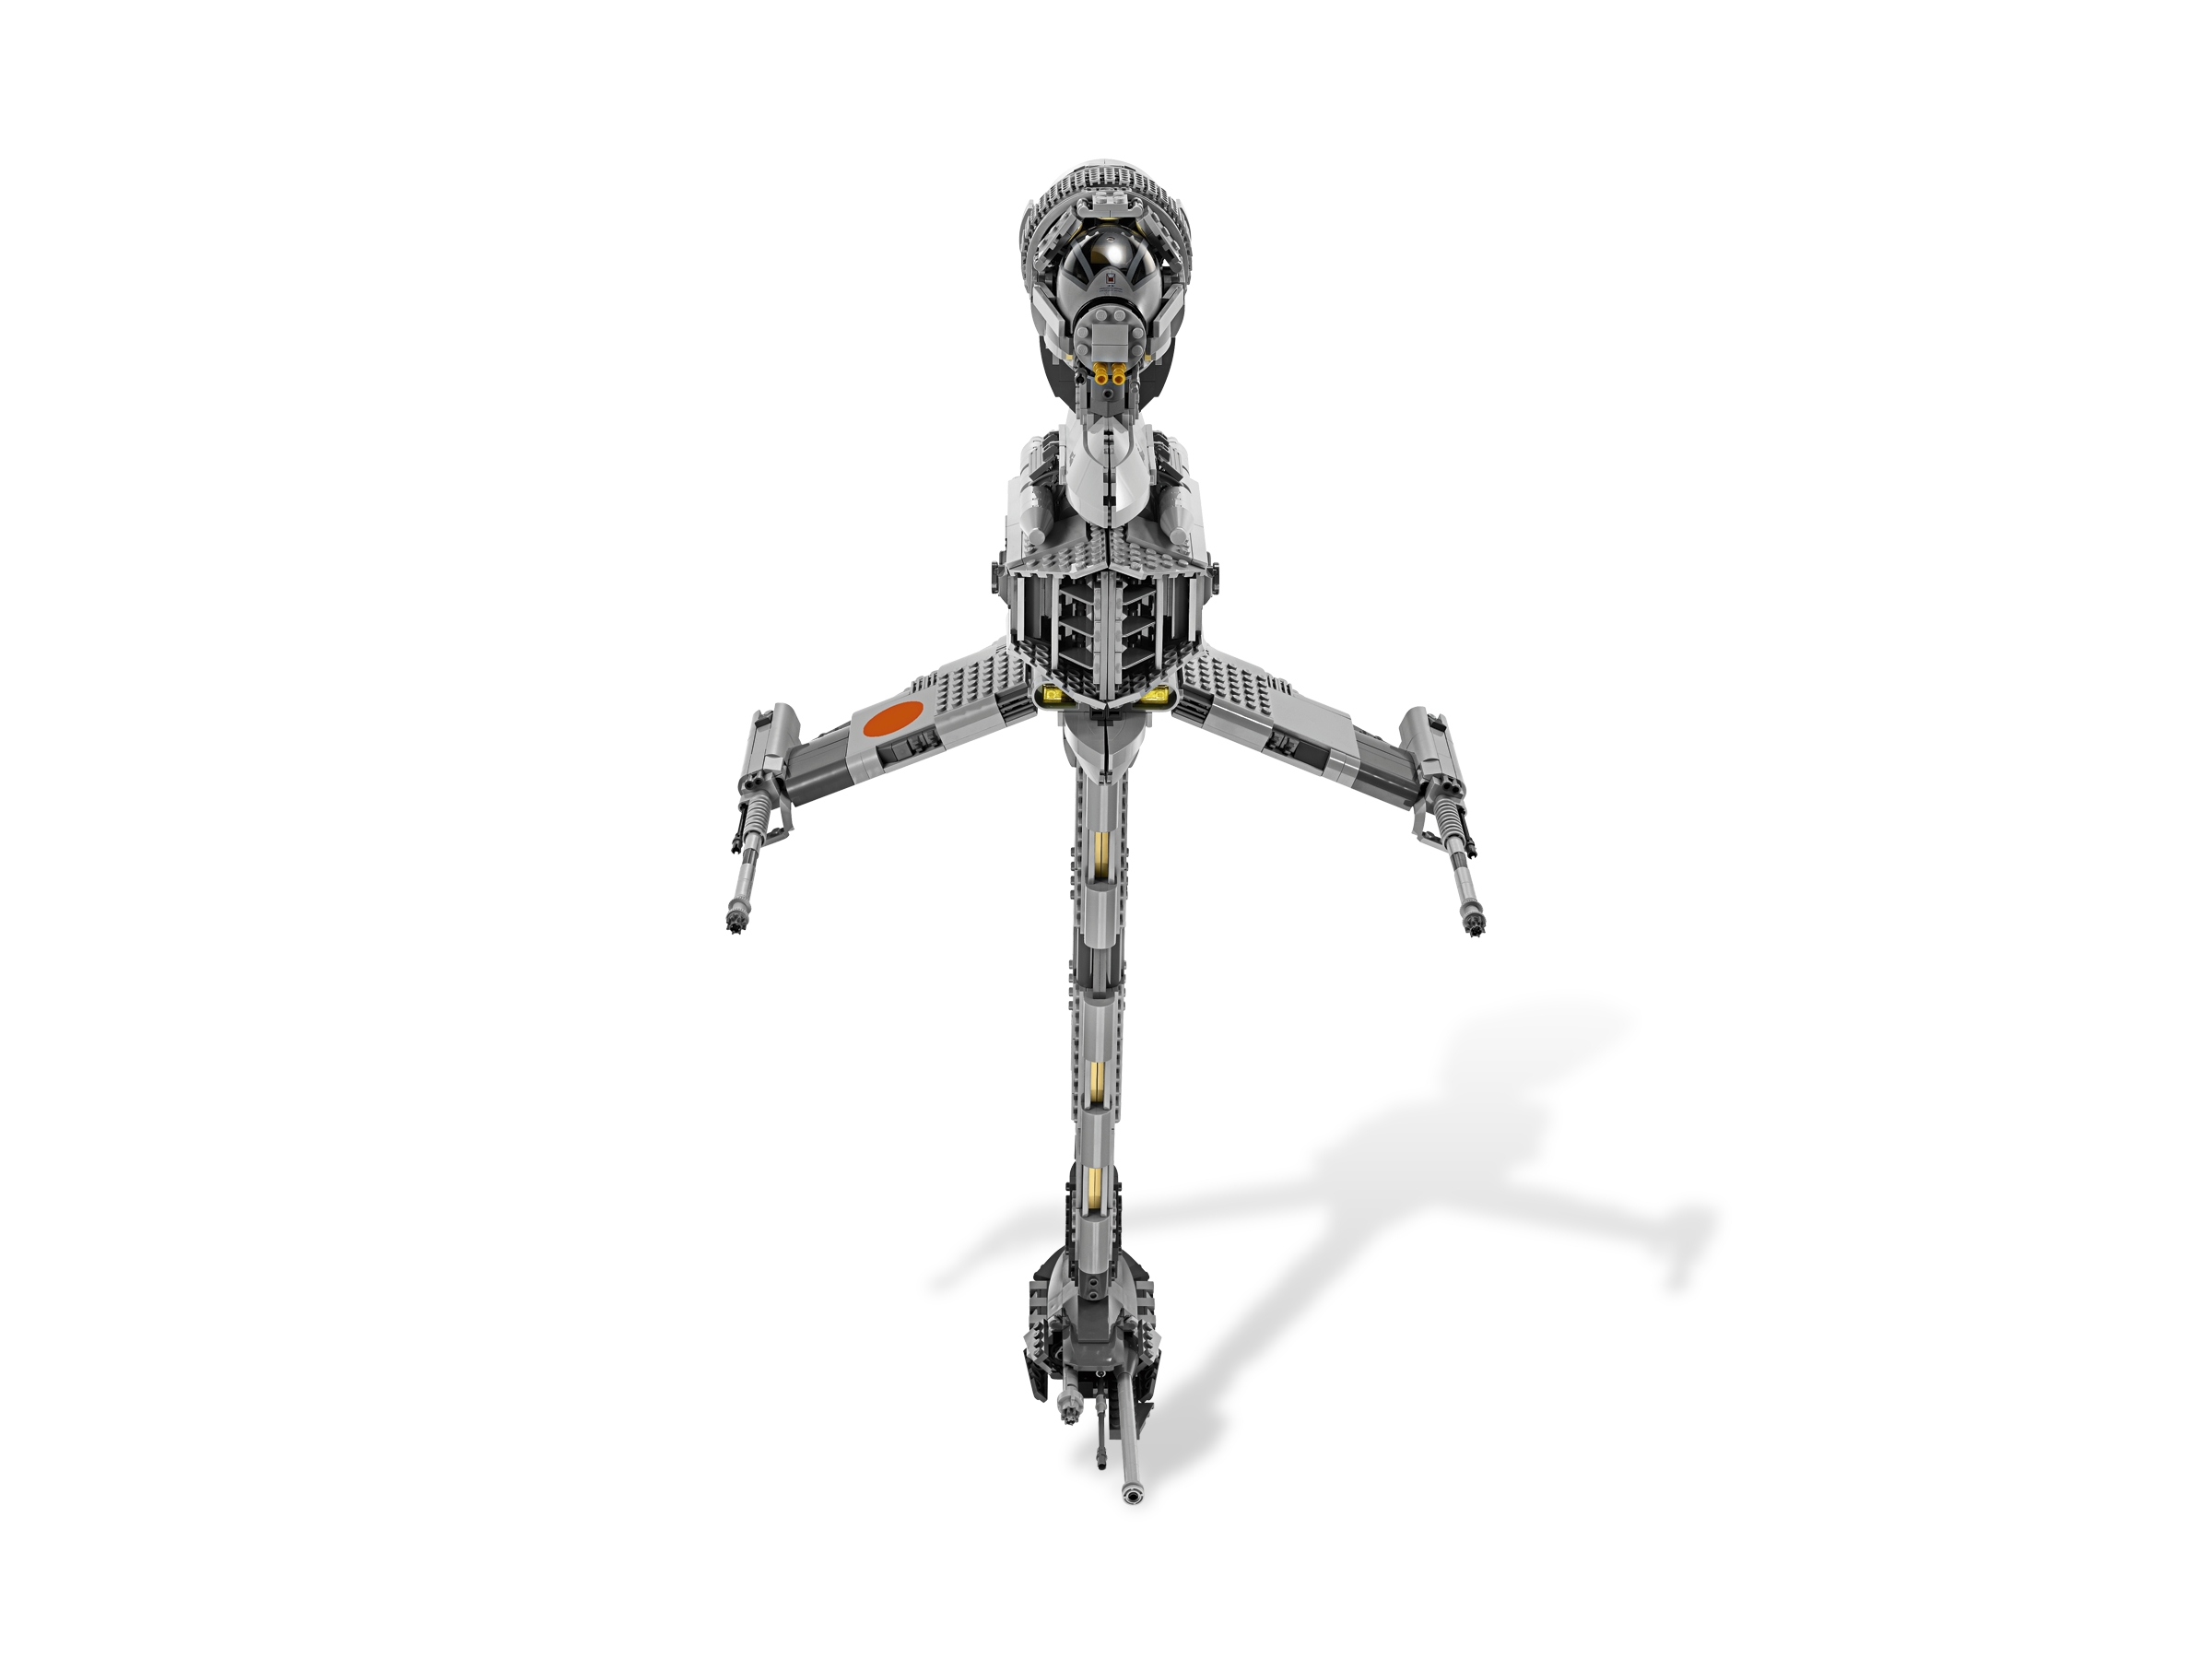 Lego 10227 Star Wars UCS B-wing Starfighter Retired Item Best Reasonable Price 